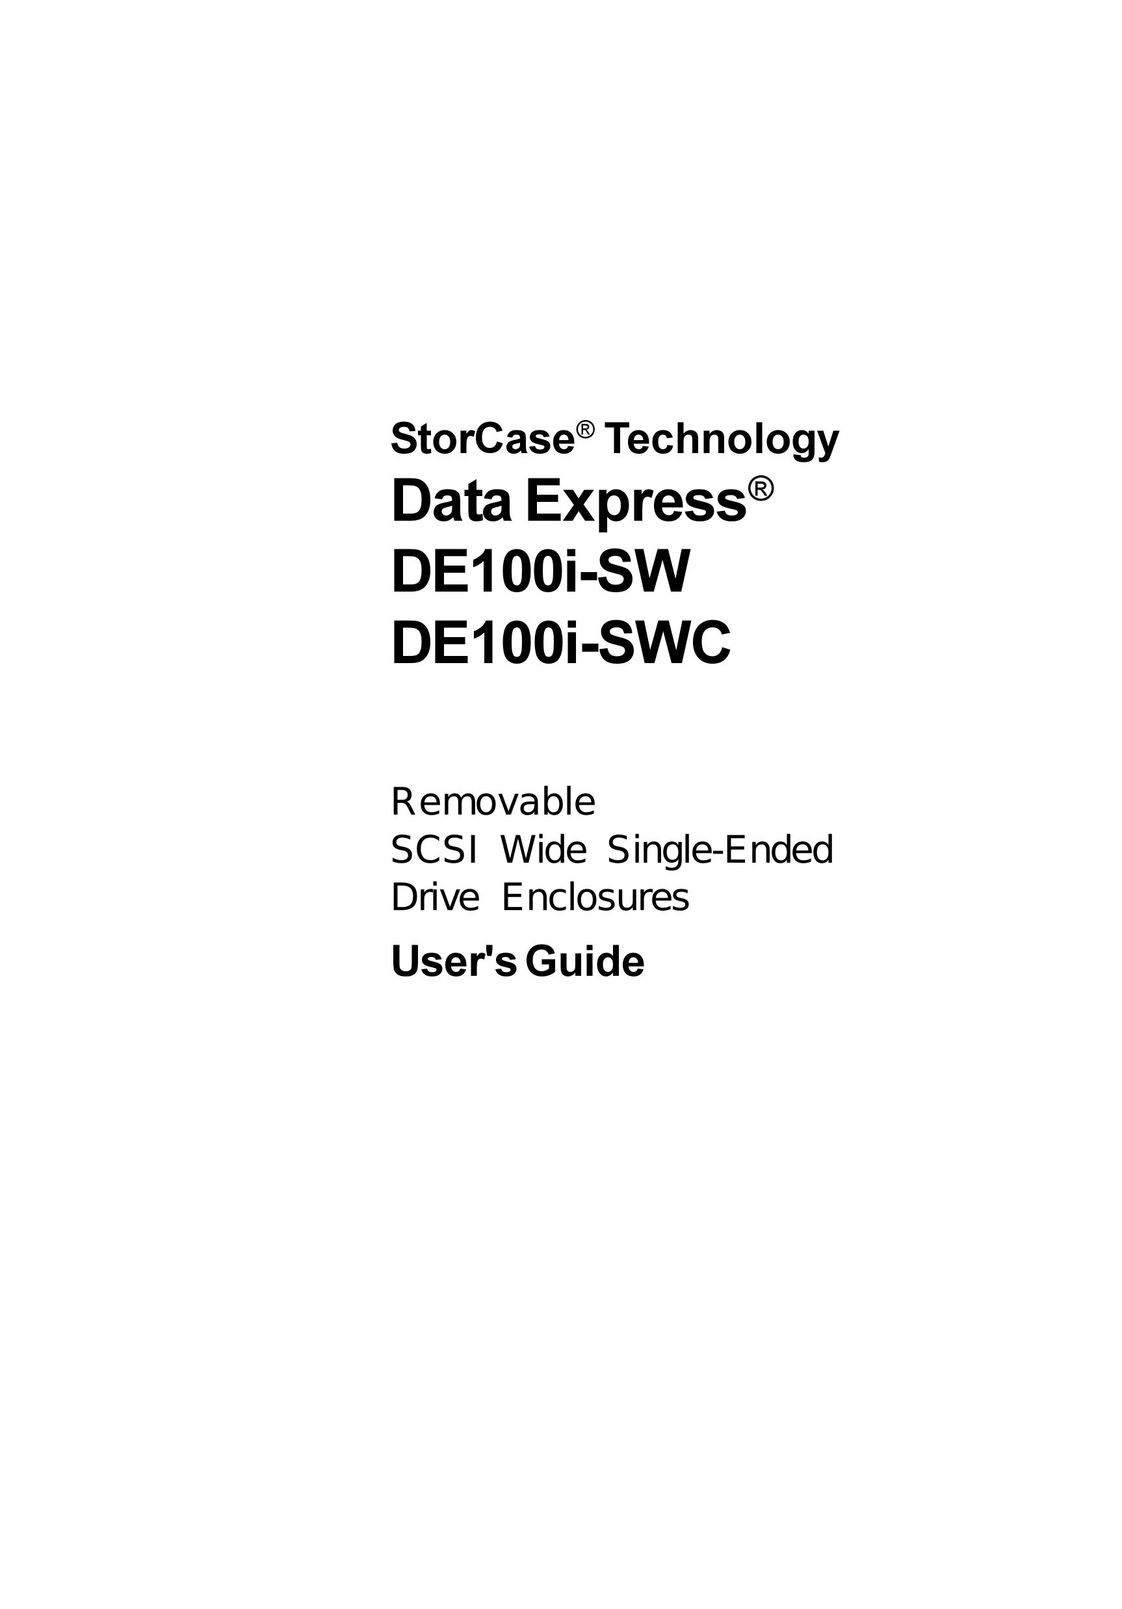 StorCase Technology DE100i-SWC Switch User Manual